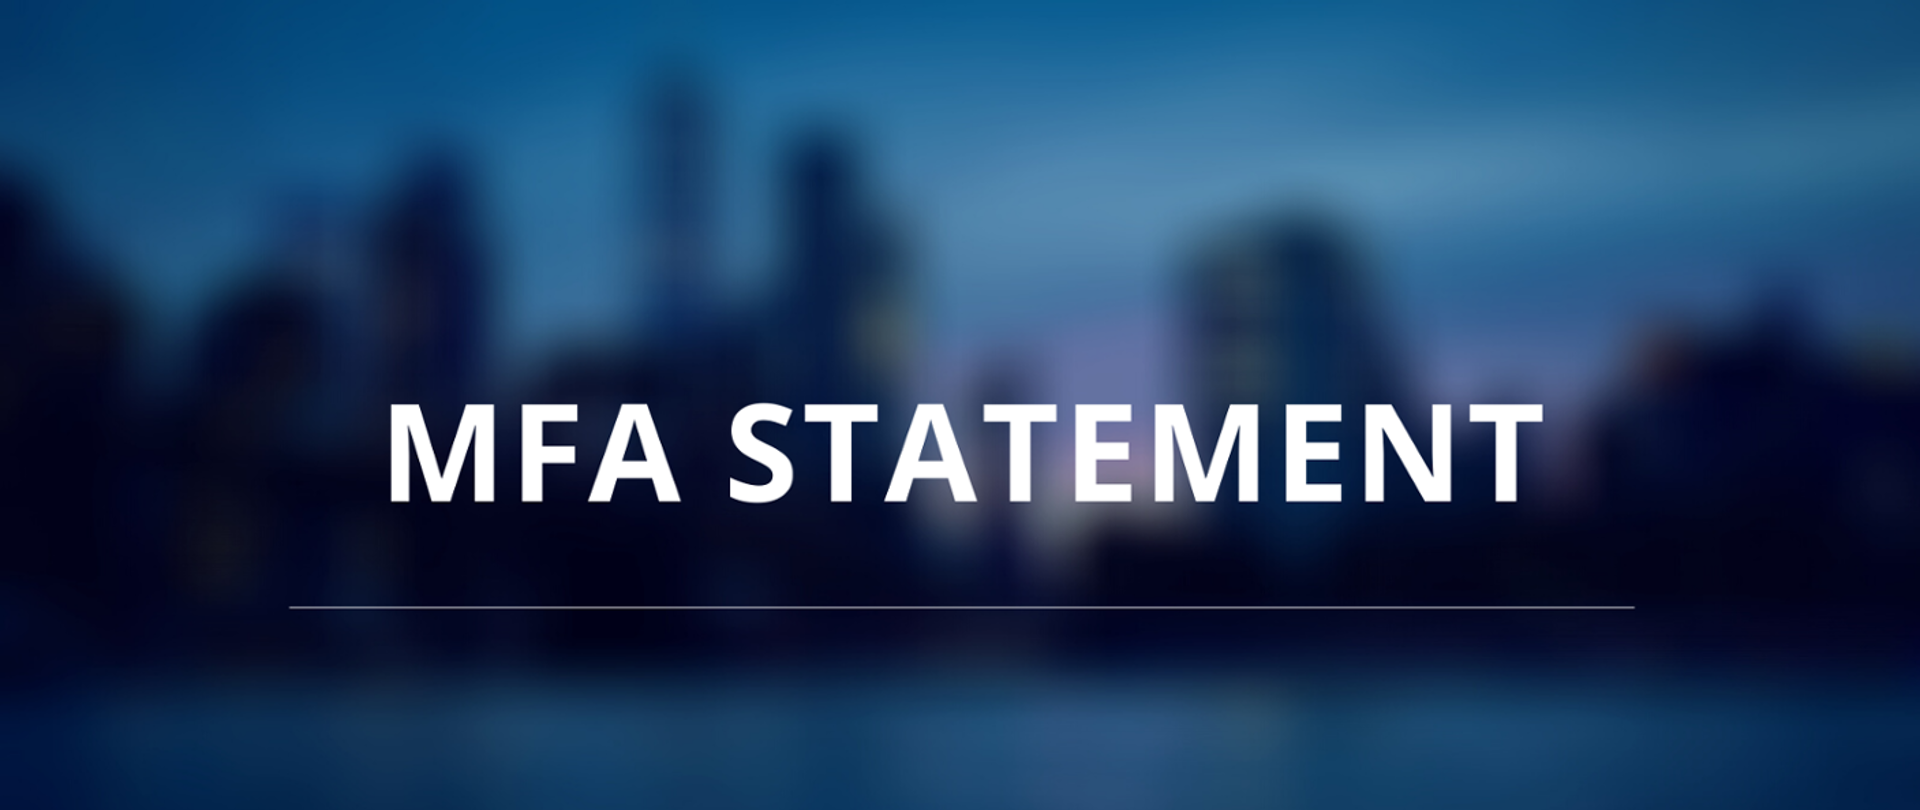 MFA statement. 